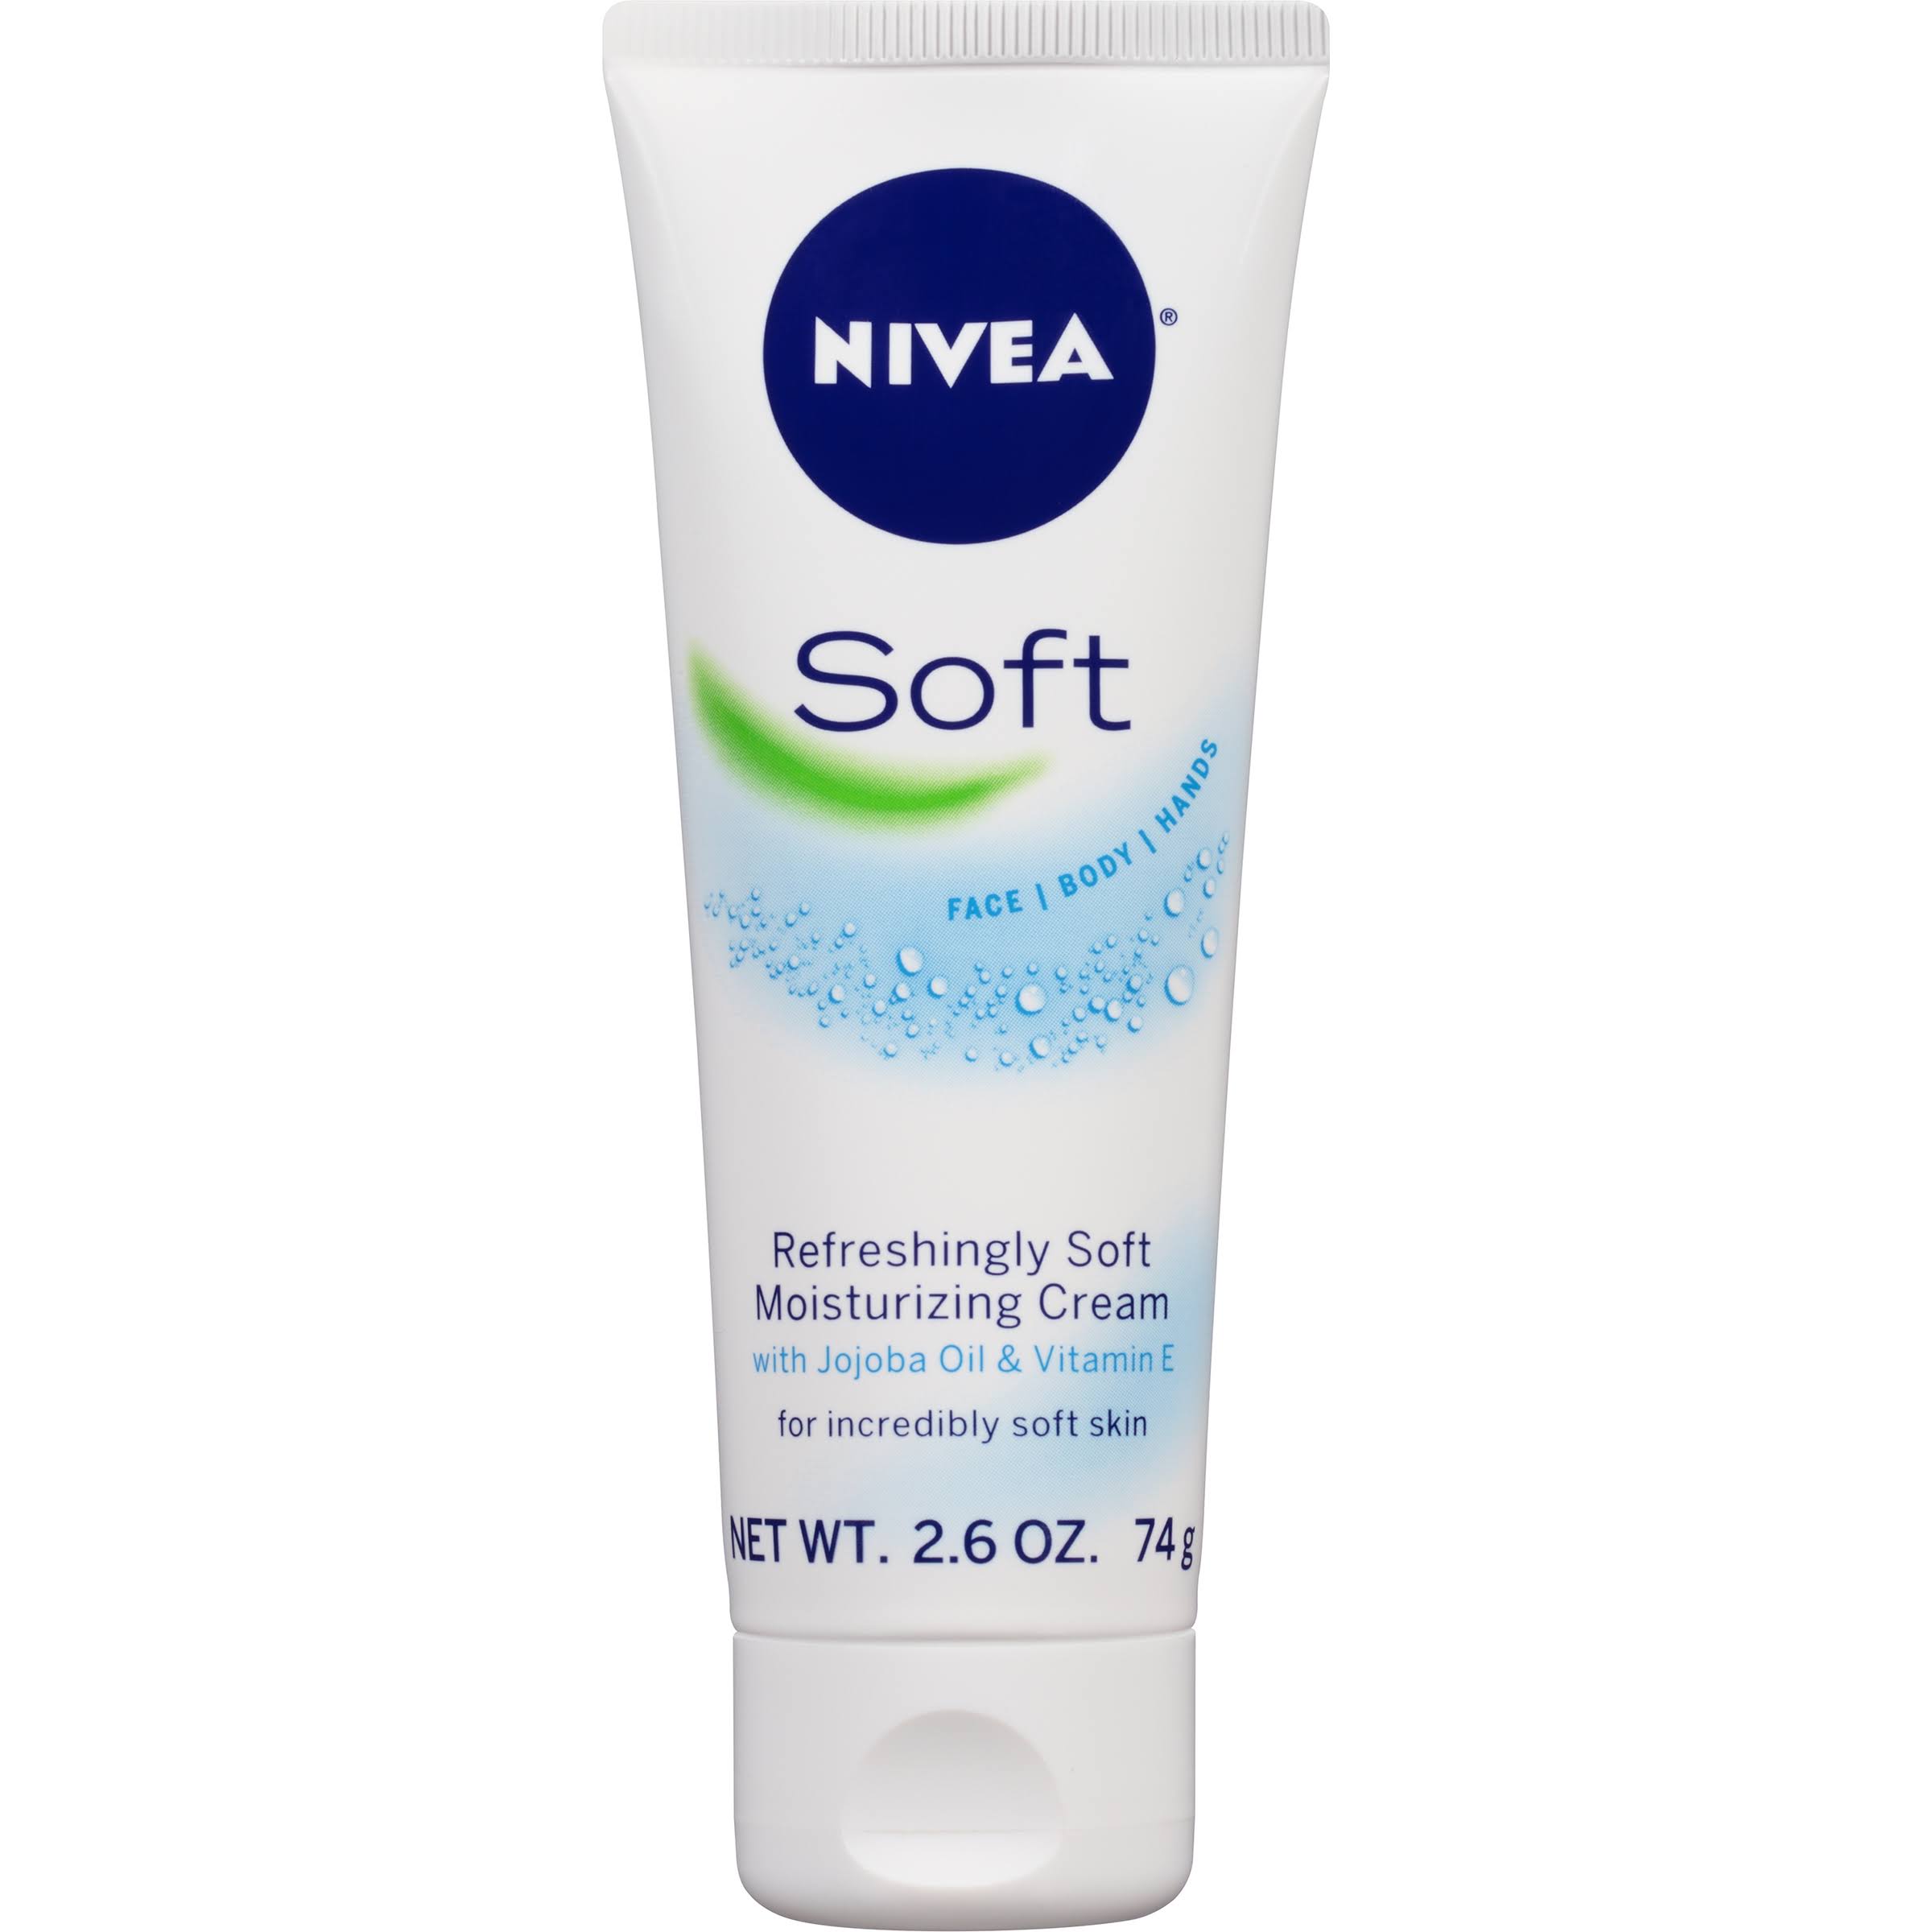 Nivea Soft Refreshingly Soft Moisturizing Cream - 2.6oz